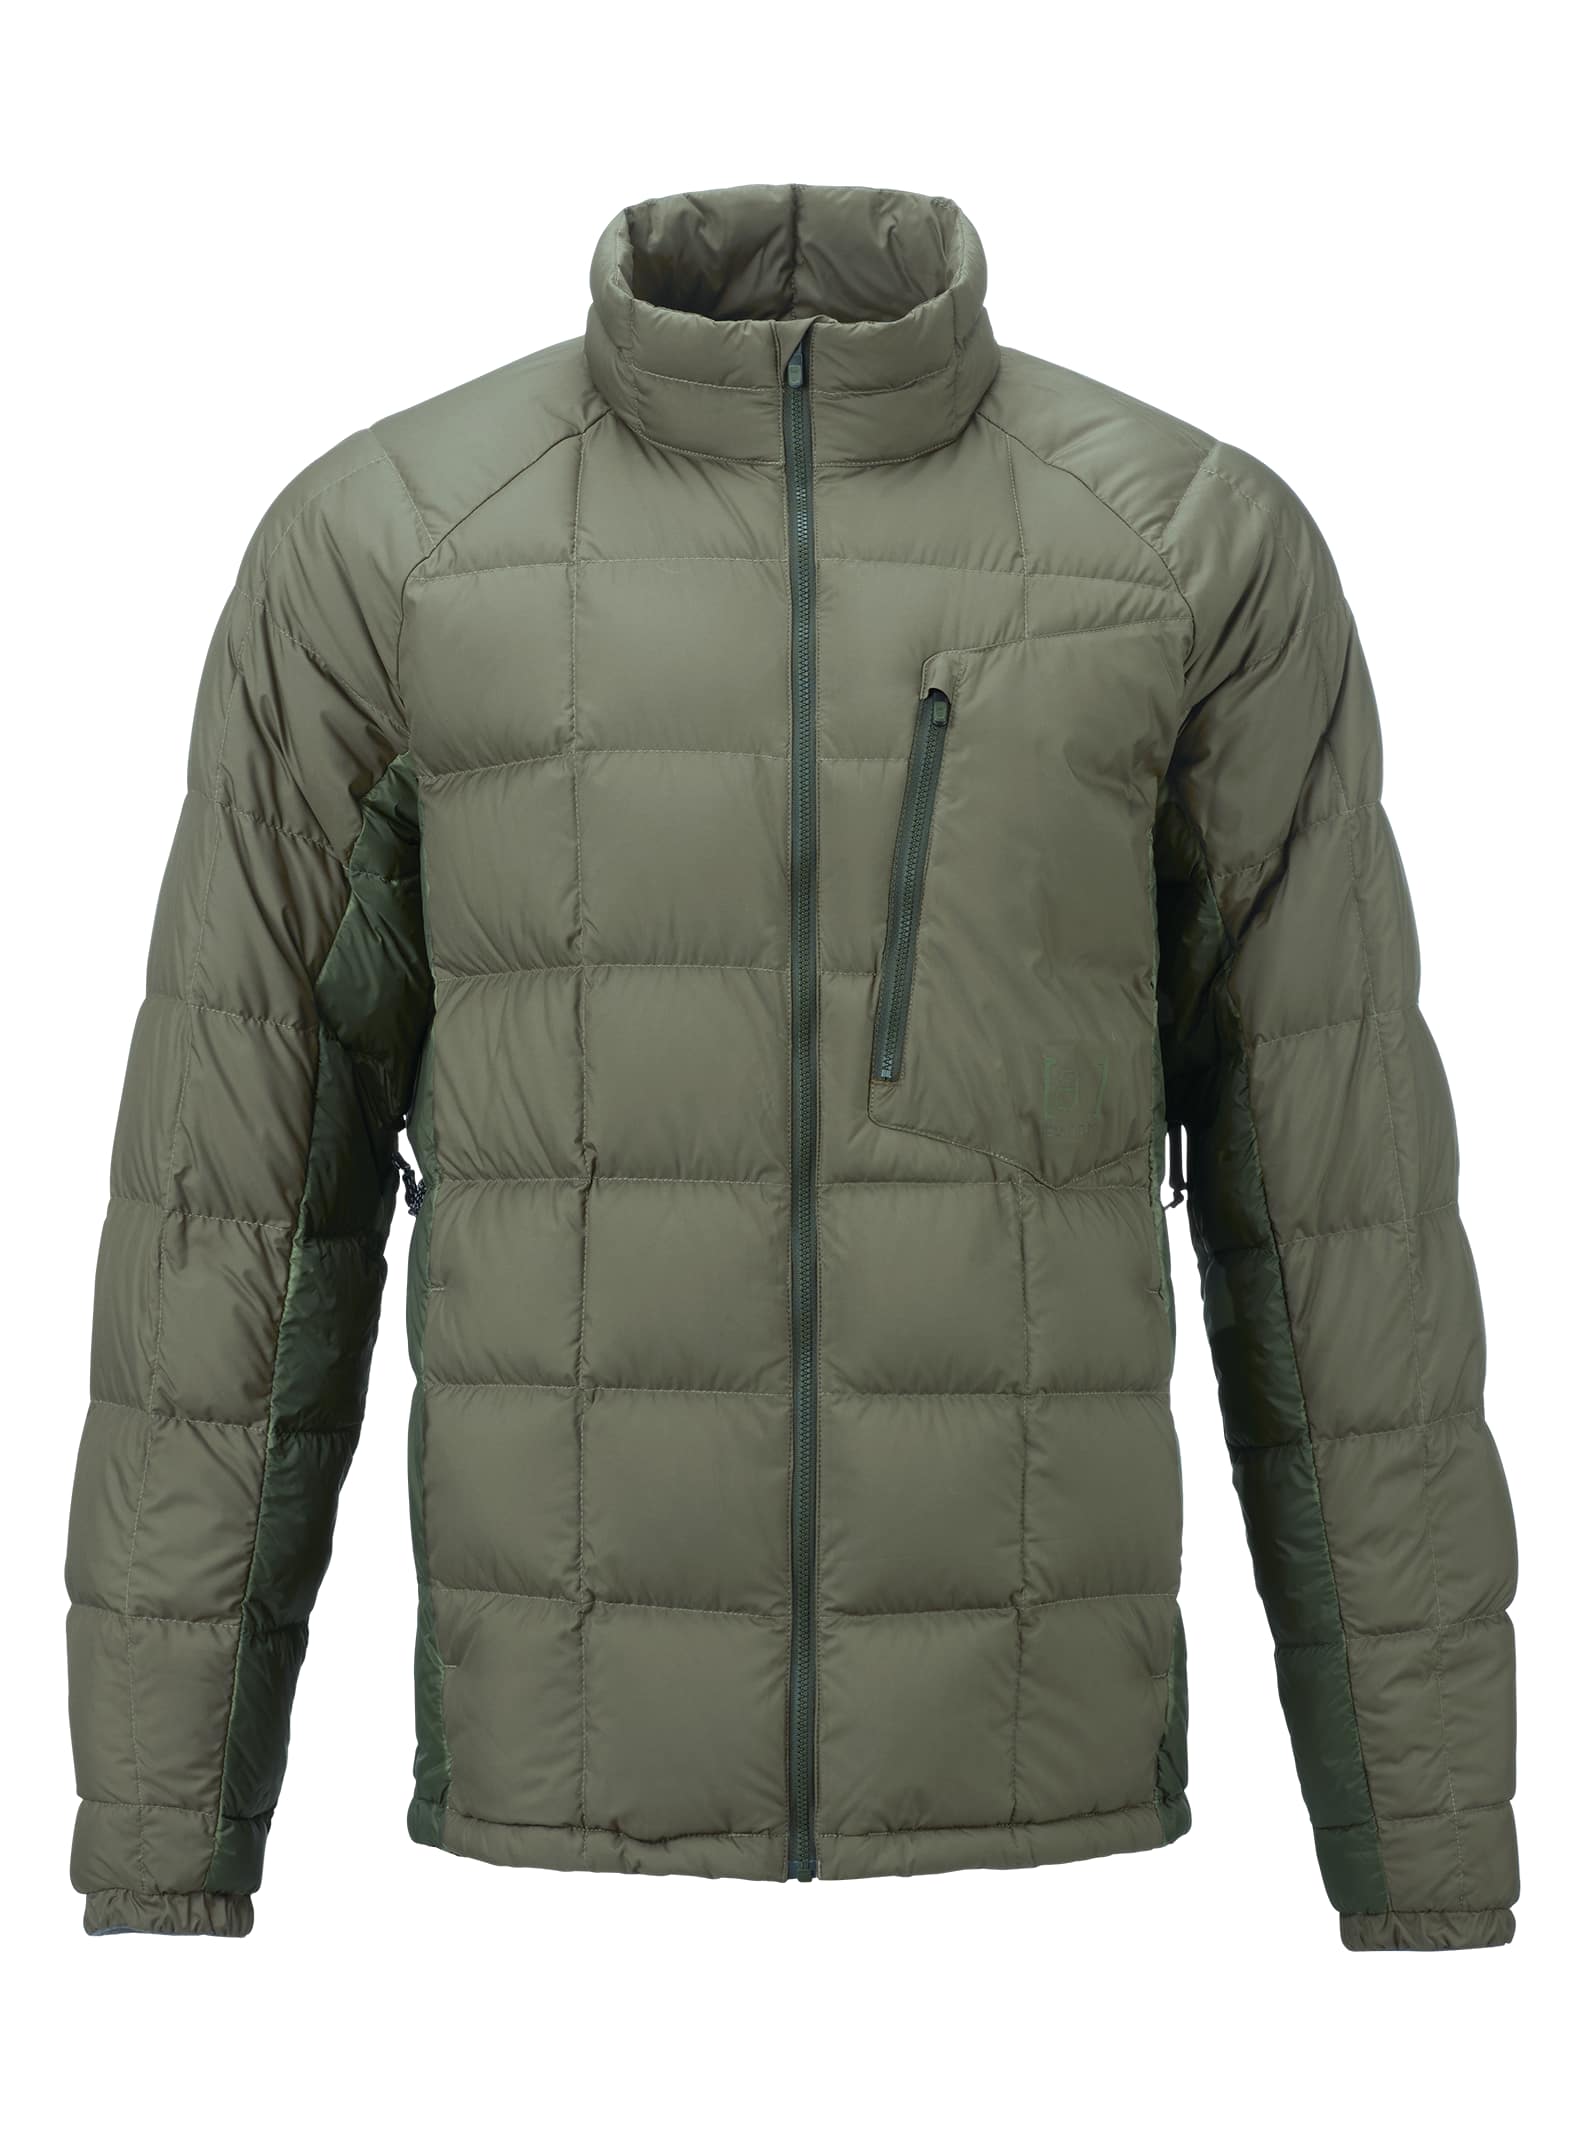 Men's Burton [ak] BK Down Insulator Jacket | Burton Snowboards 